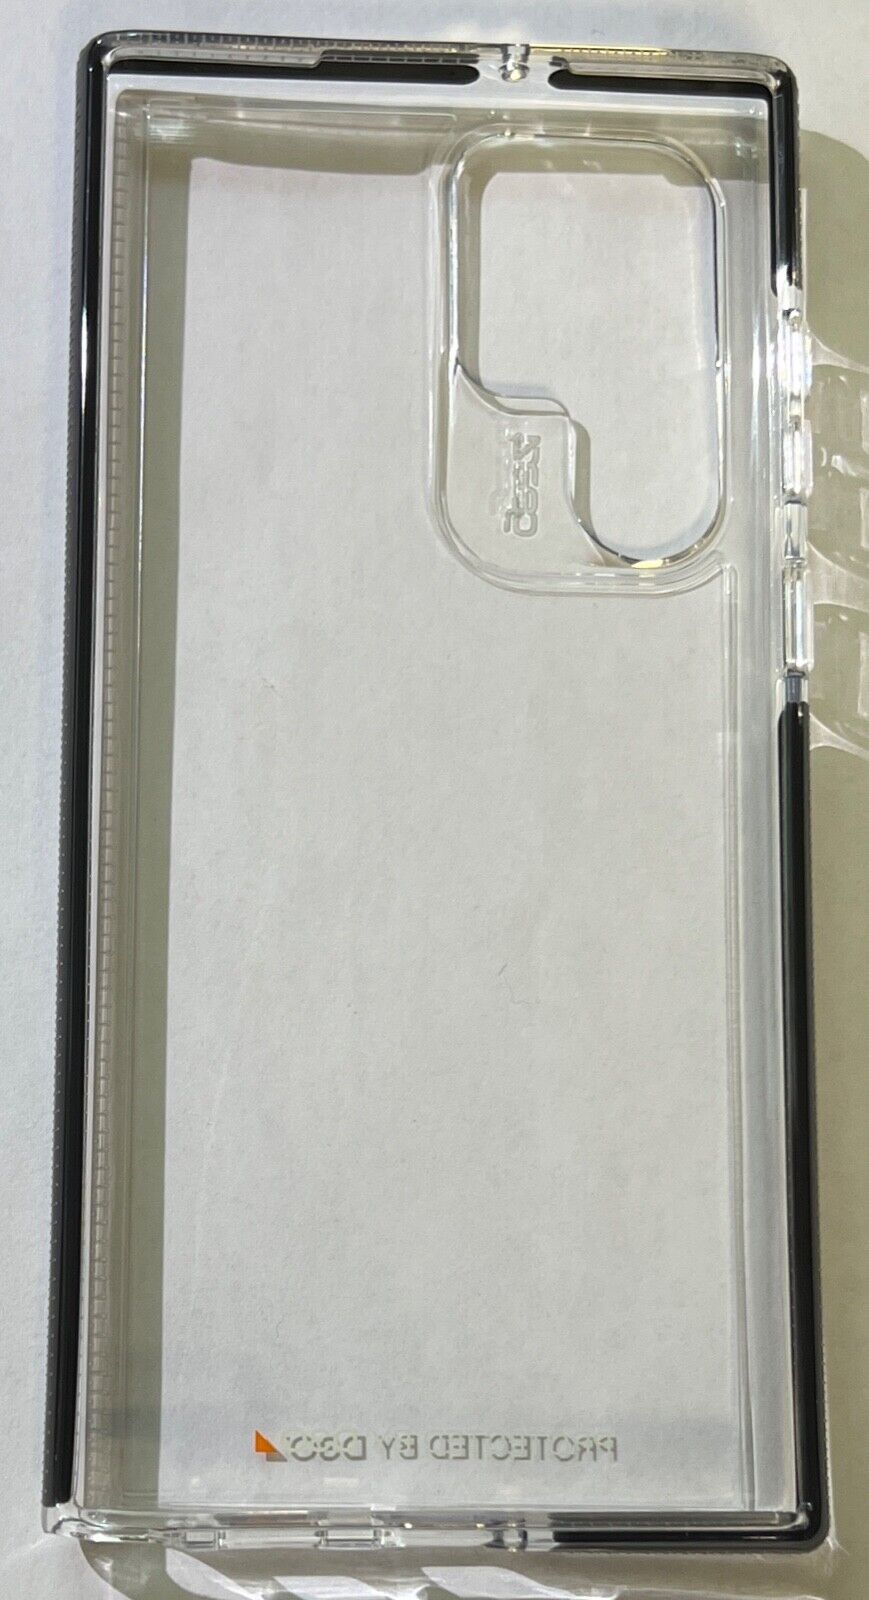 ZAGG Gear4 Piccadilly Slim D3O Case for Samsung Galaxy S22 Ultra Clear/Black